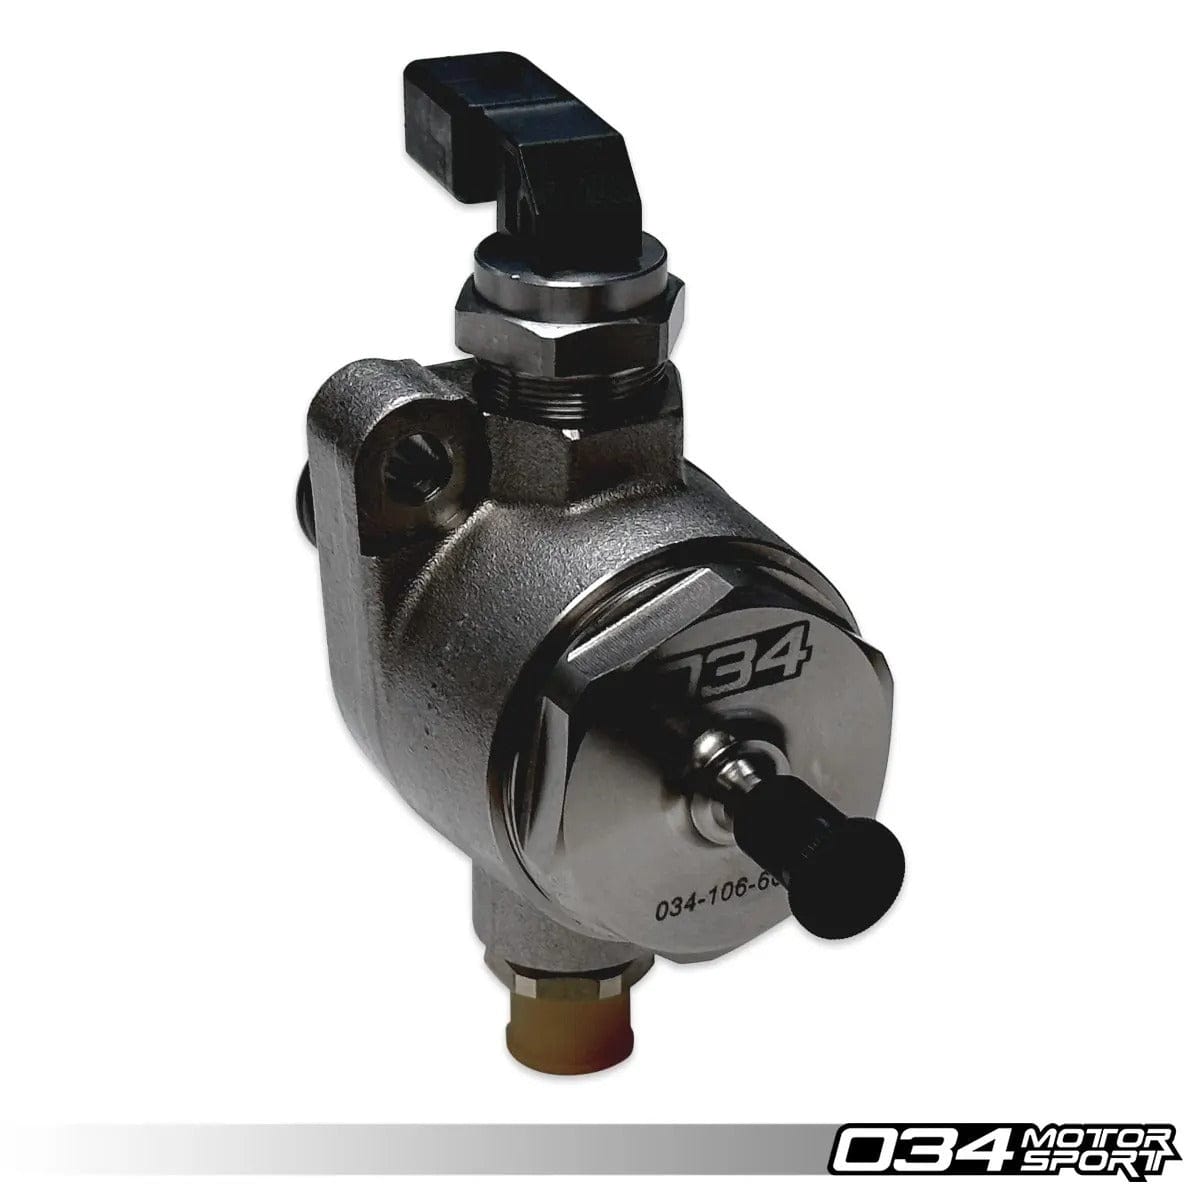 034 Motorsport High Pressure Fuel Pump Upgrade - VW/Audi / 2.0T / EA888 Gen 3